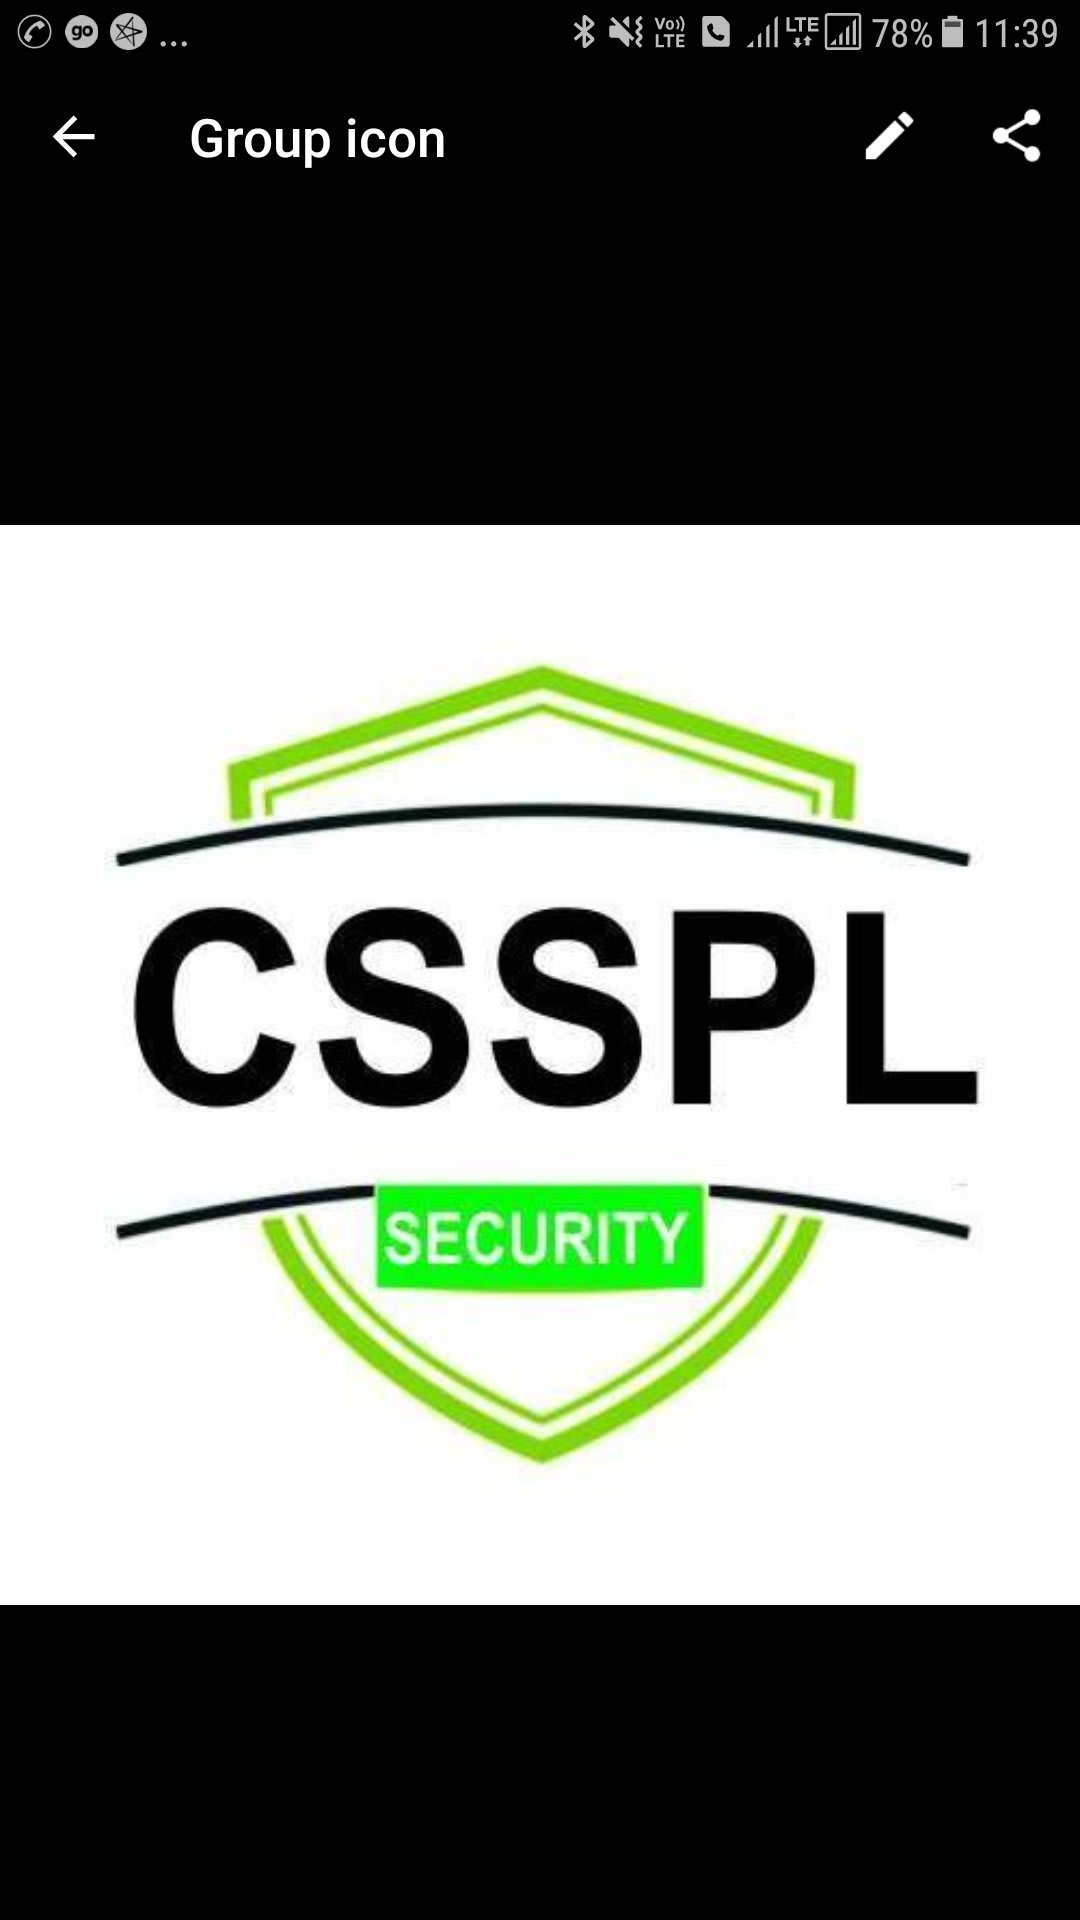 Camera security services pvt Ltd